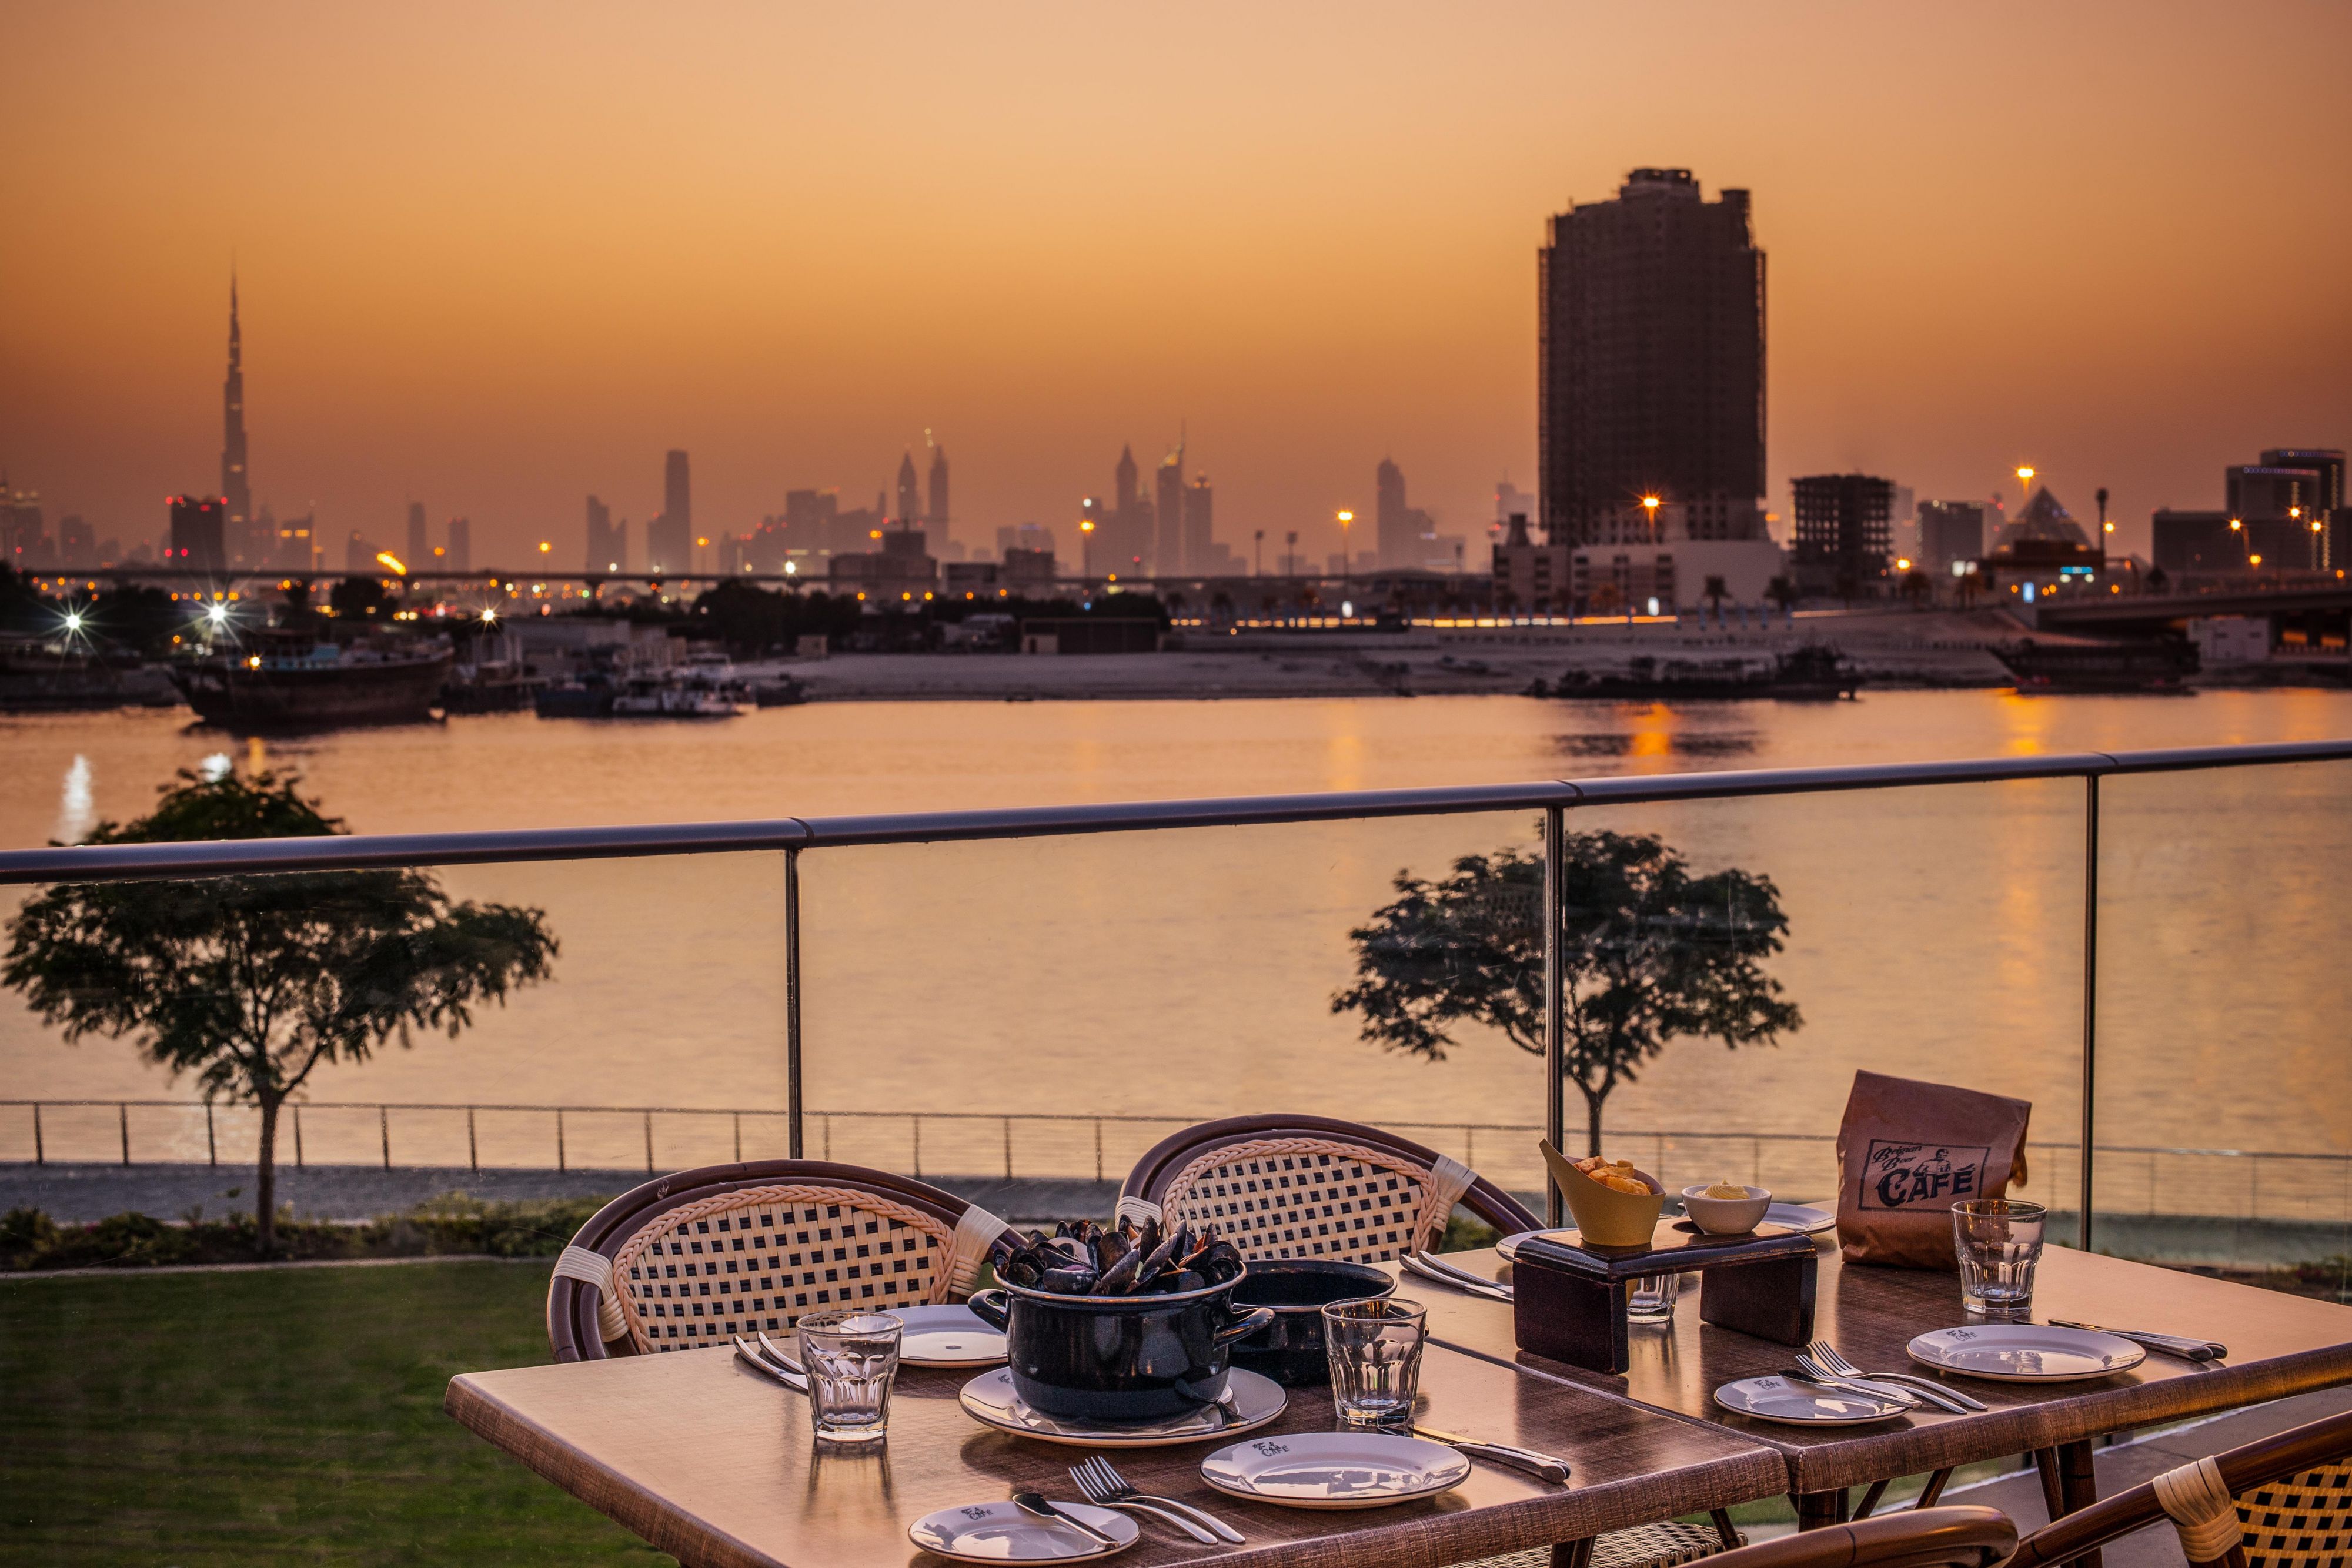 Dubai’s original Belgian Cafe Dubai Festival City outdoor terrace